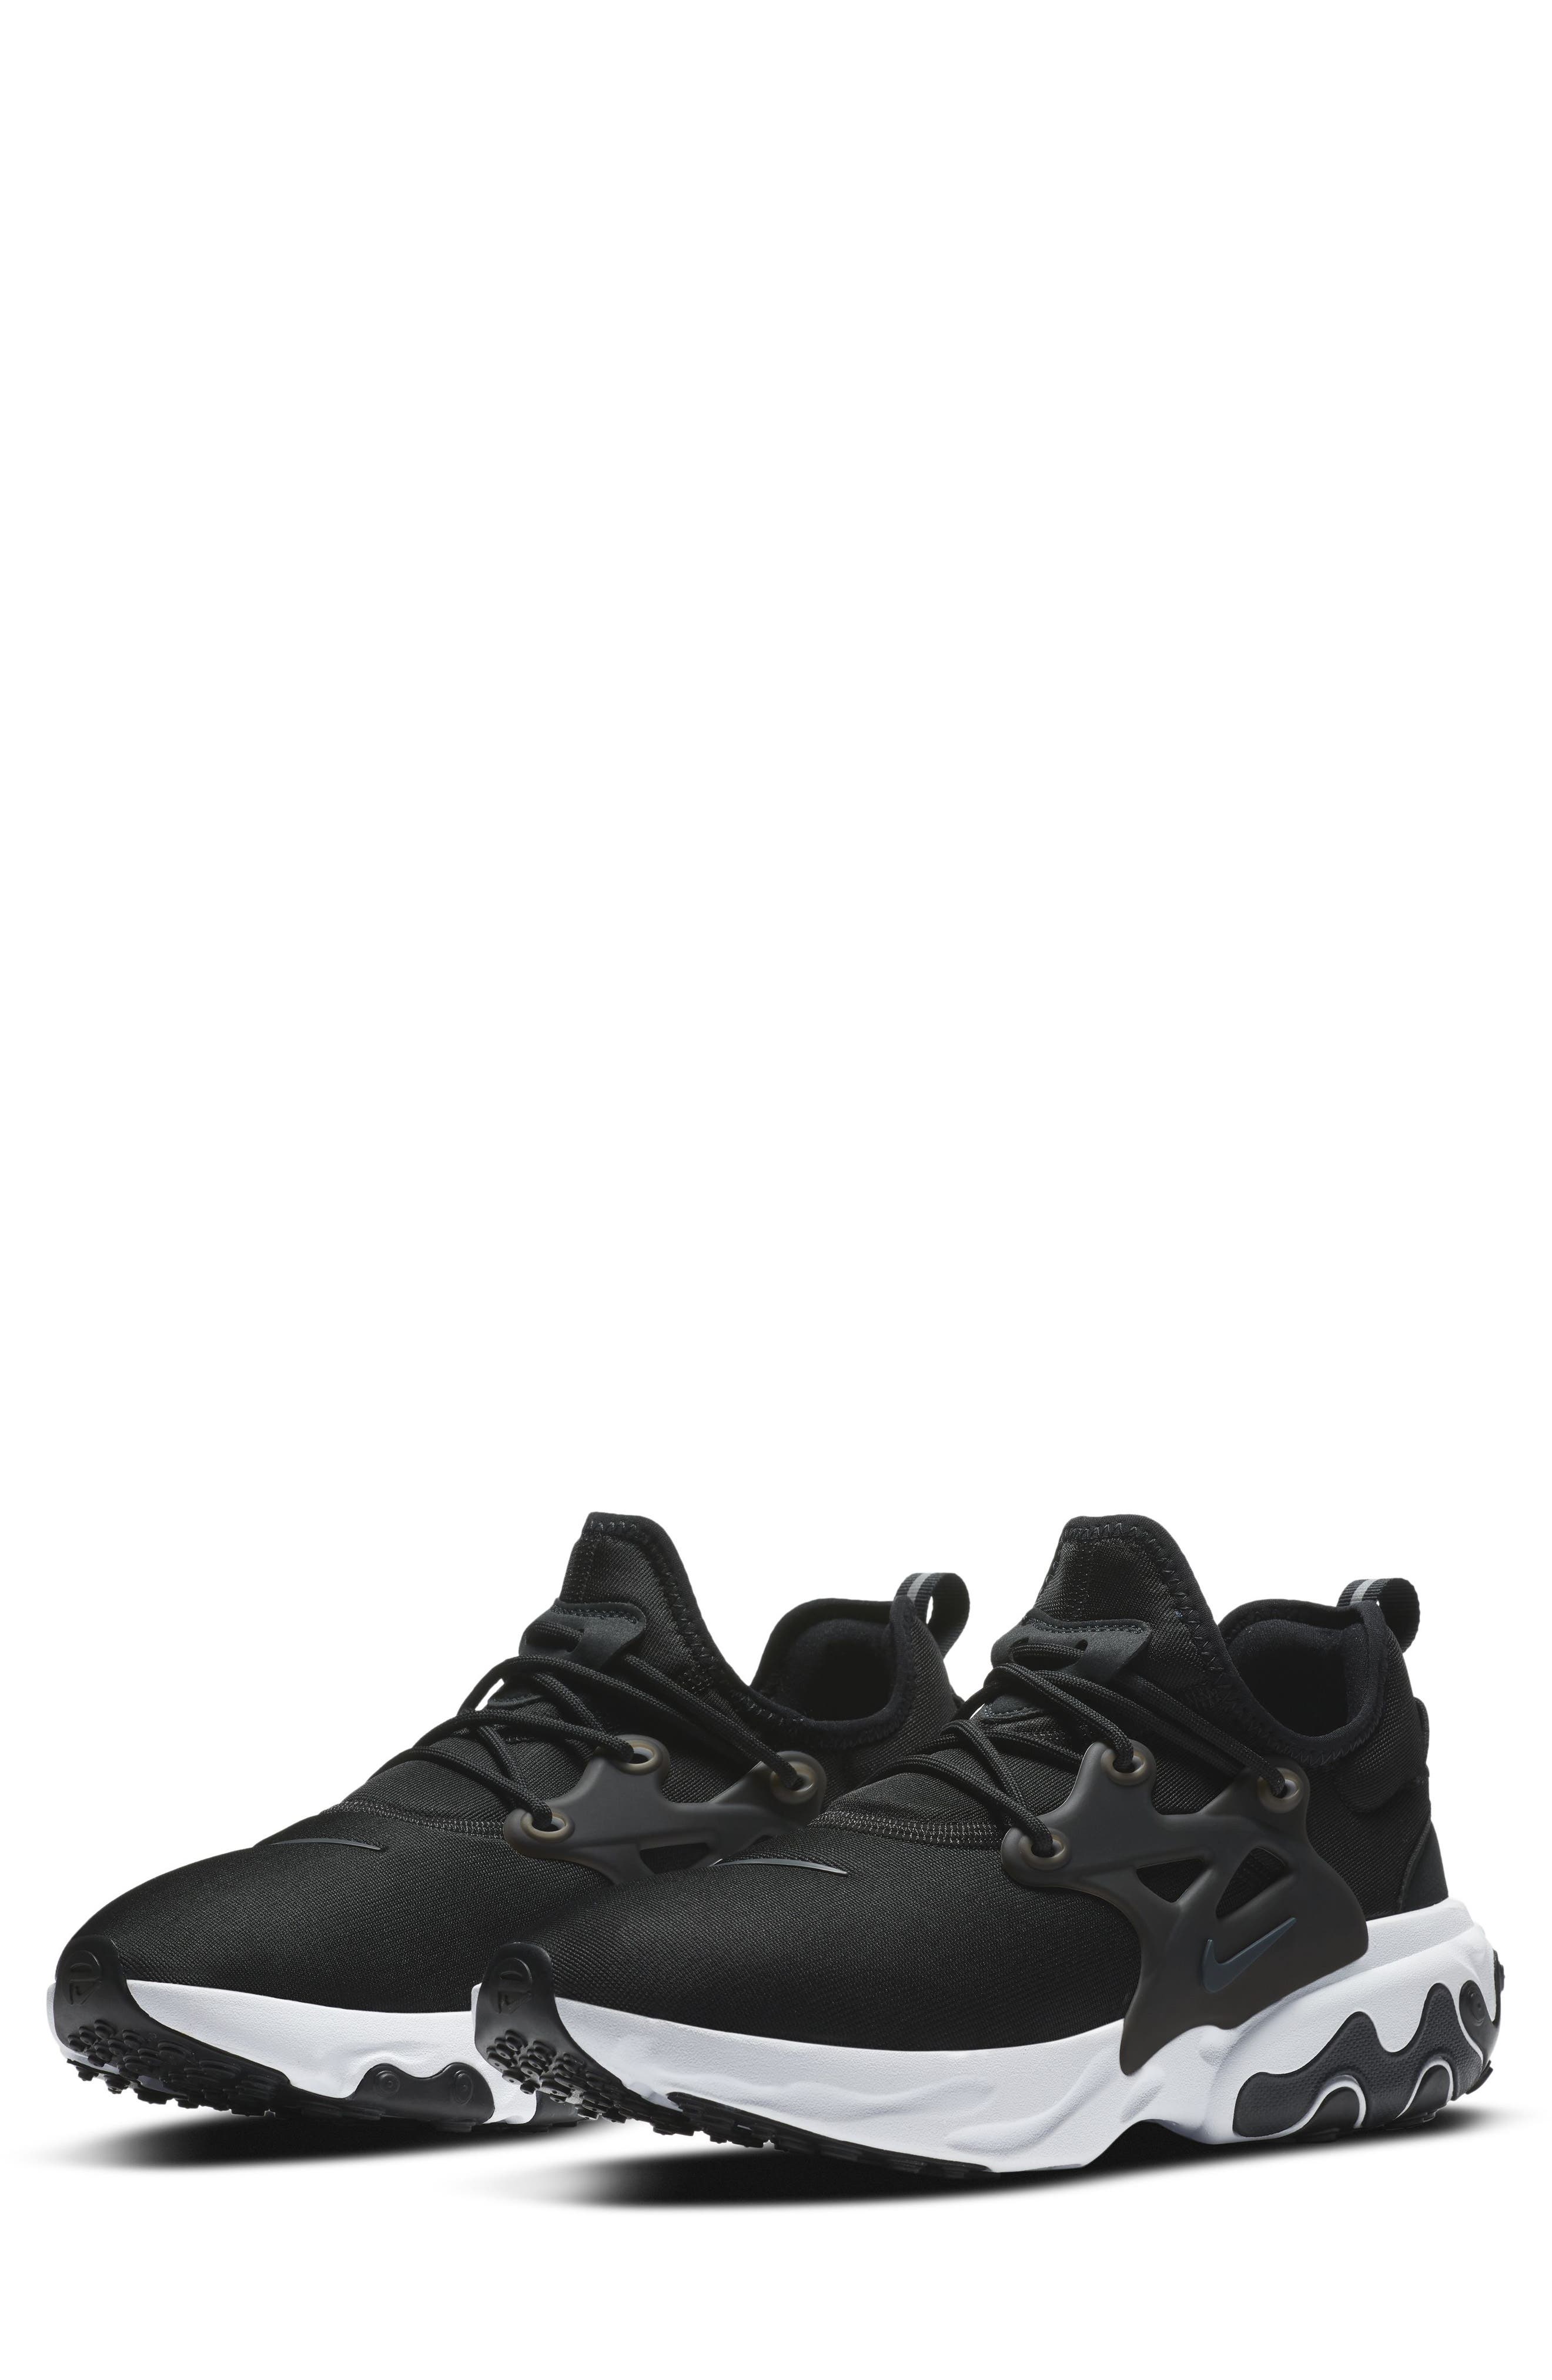 Nike Presto React Sneaker, Size 6.5 